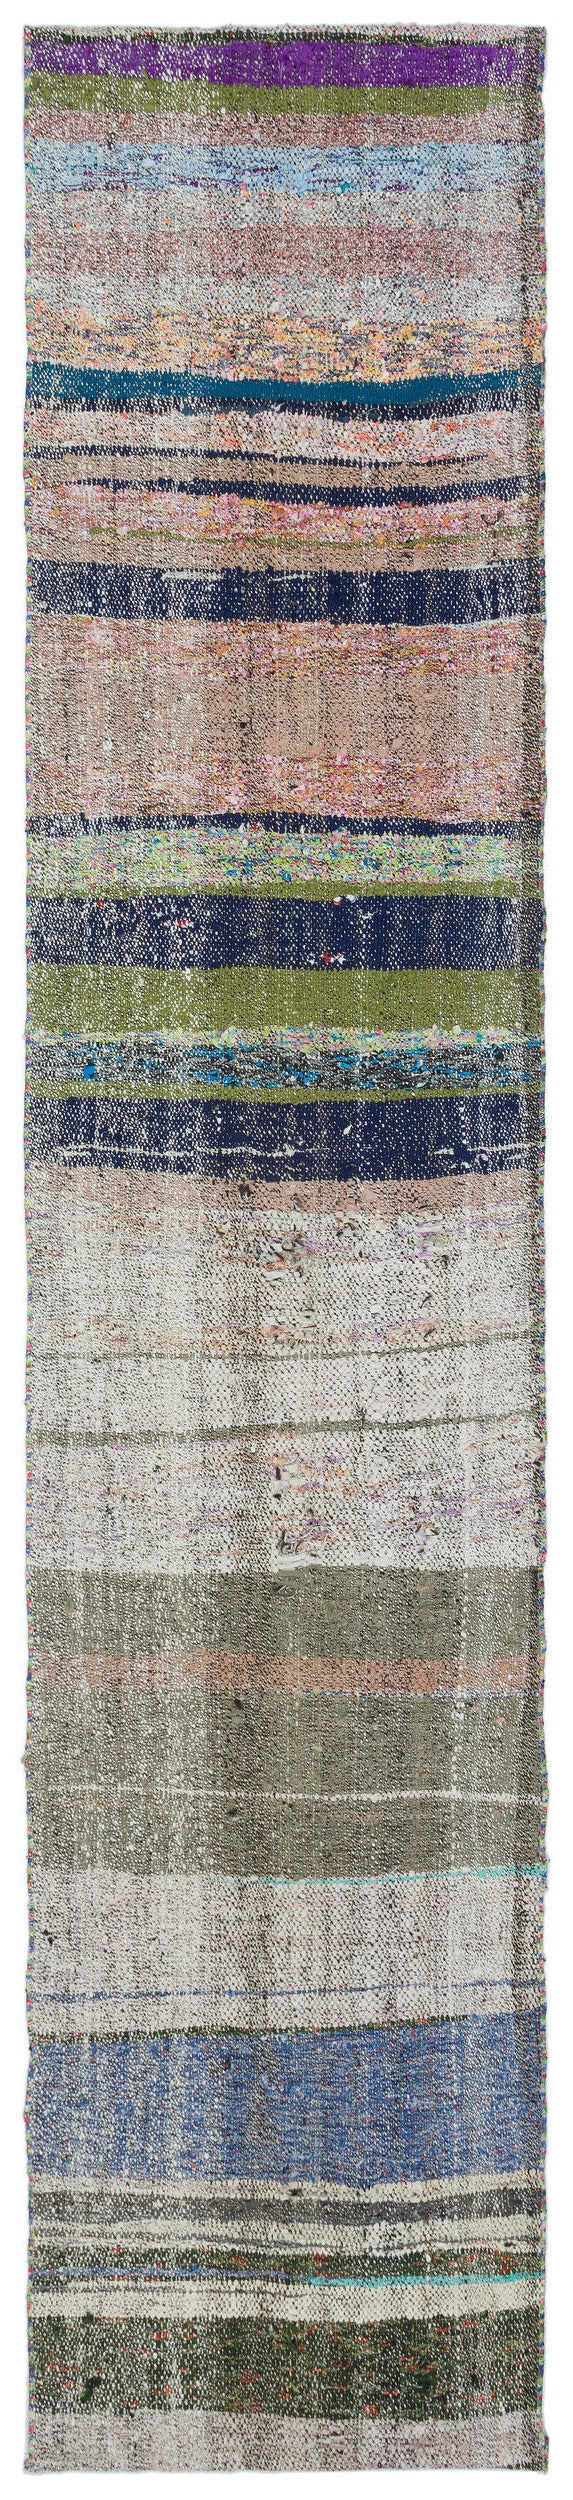 Cretan Beige Striped Wool Hand-Woven Carpet 062 x 294